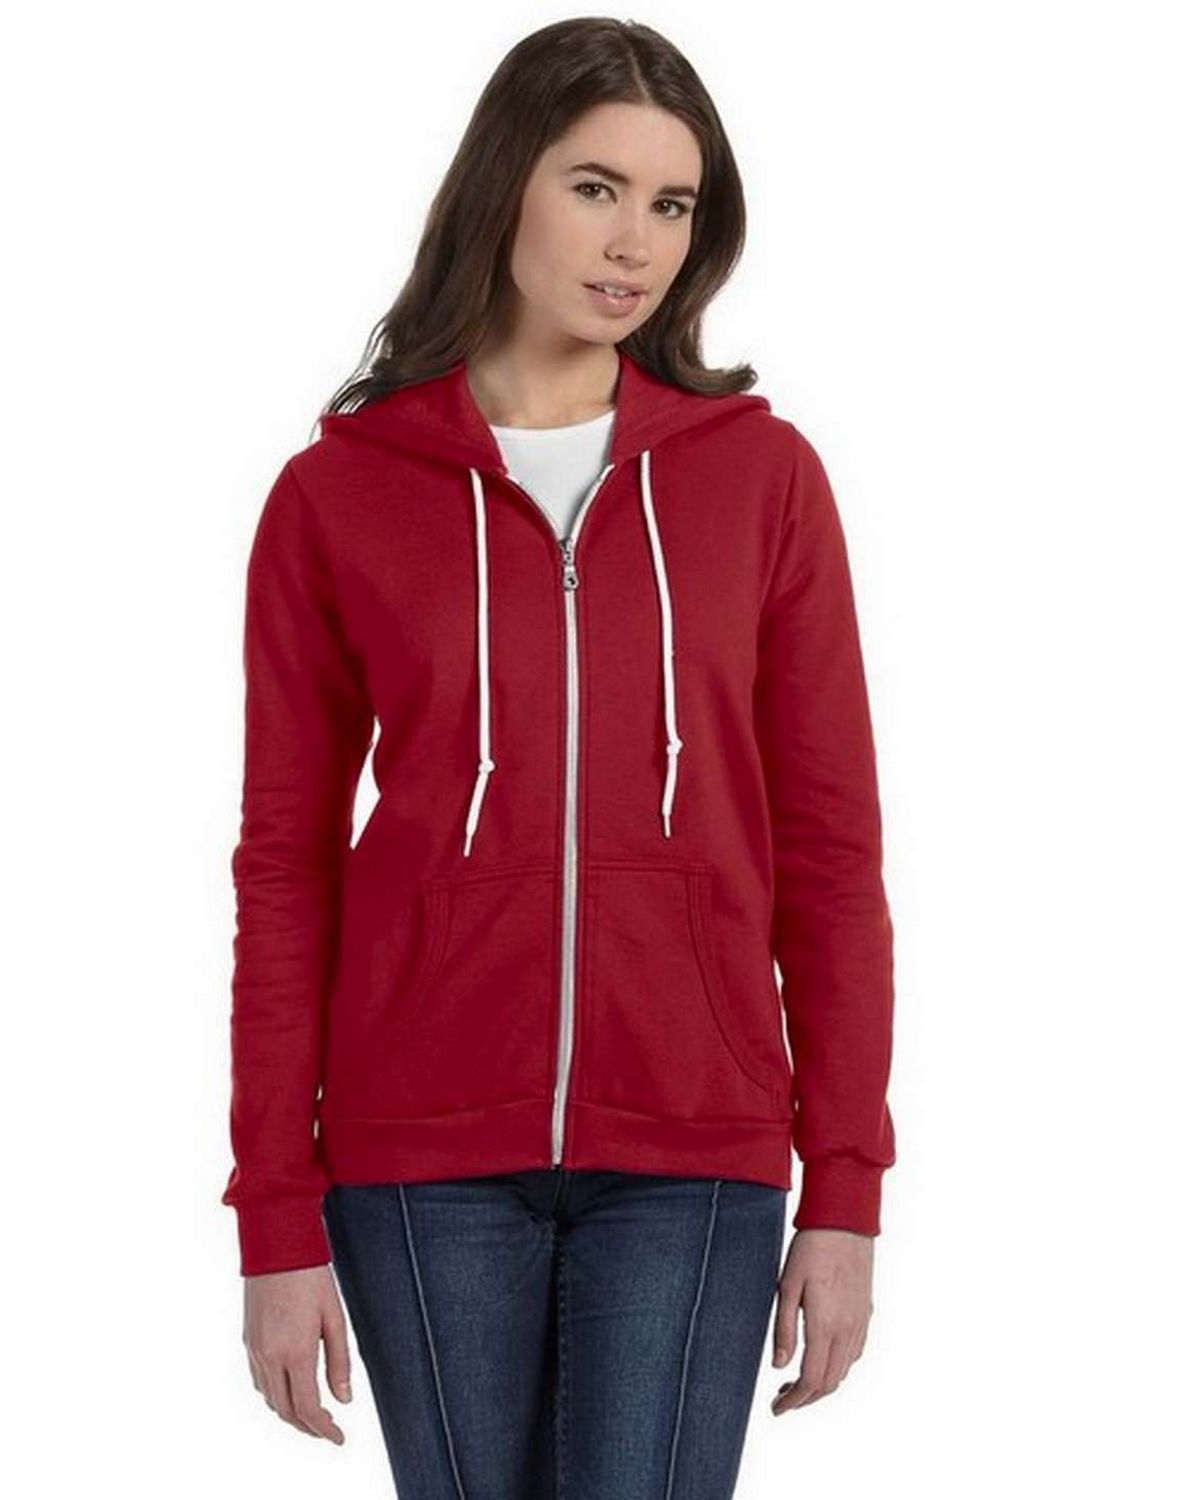 Anvil 71600L Ladies Combed Ringspun Fashion Full-Zip Hooded sweatshirt